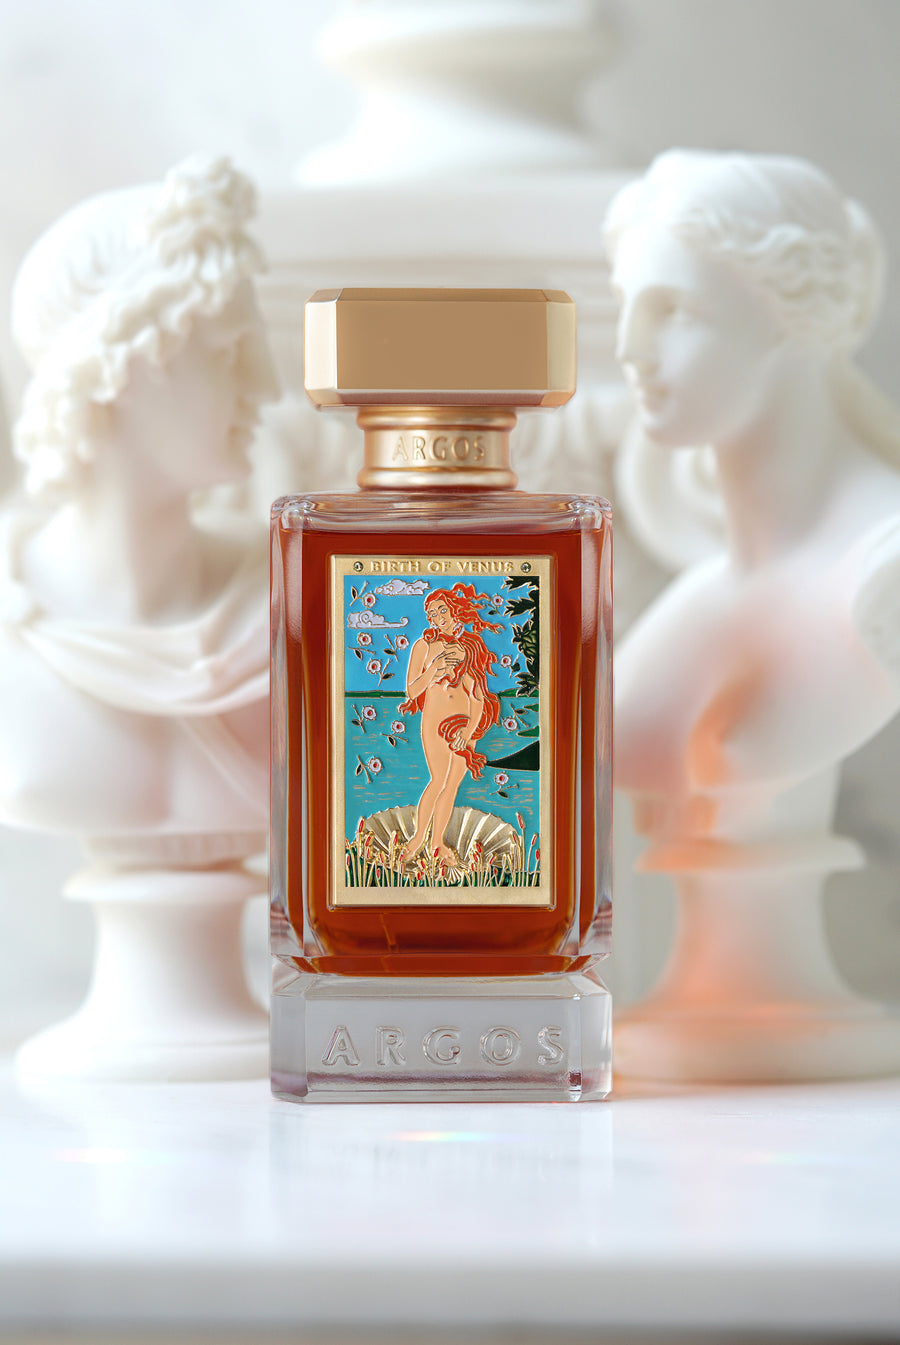 Argos BIRTH OF VENUS Perfume